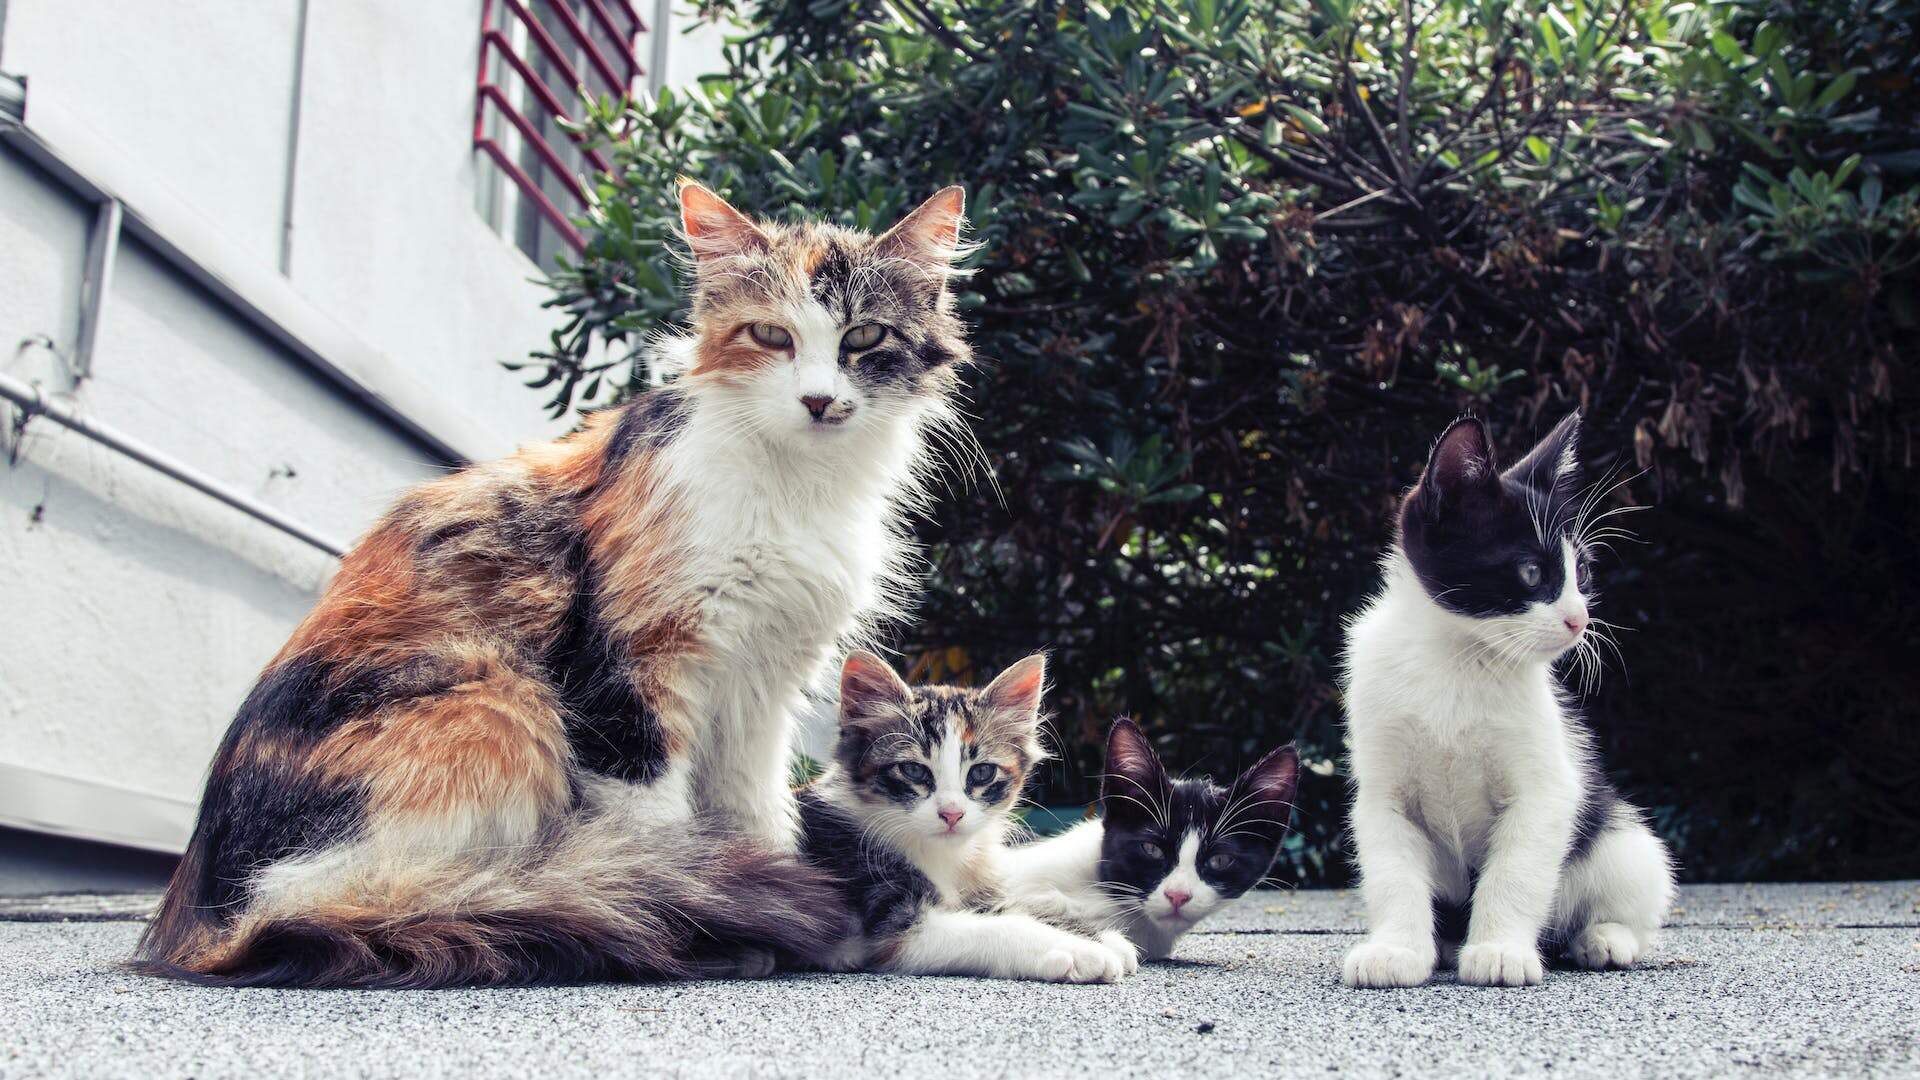 A litter of kittens sitting outdoors